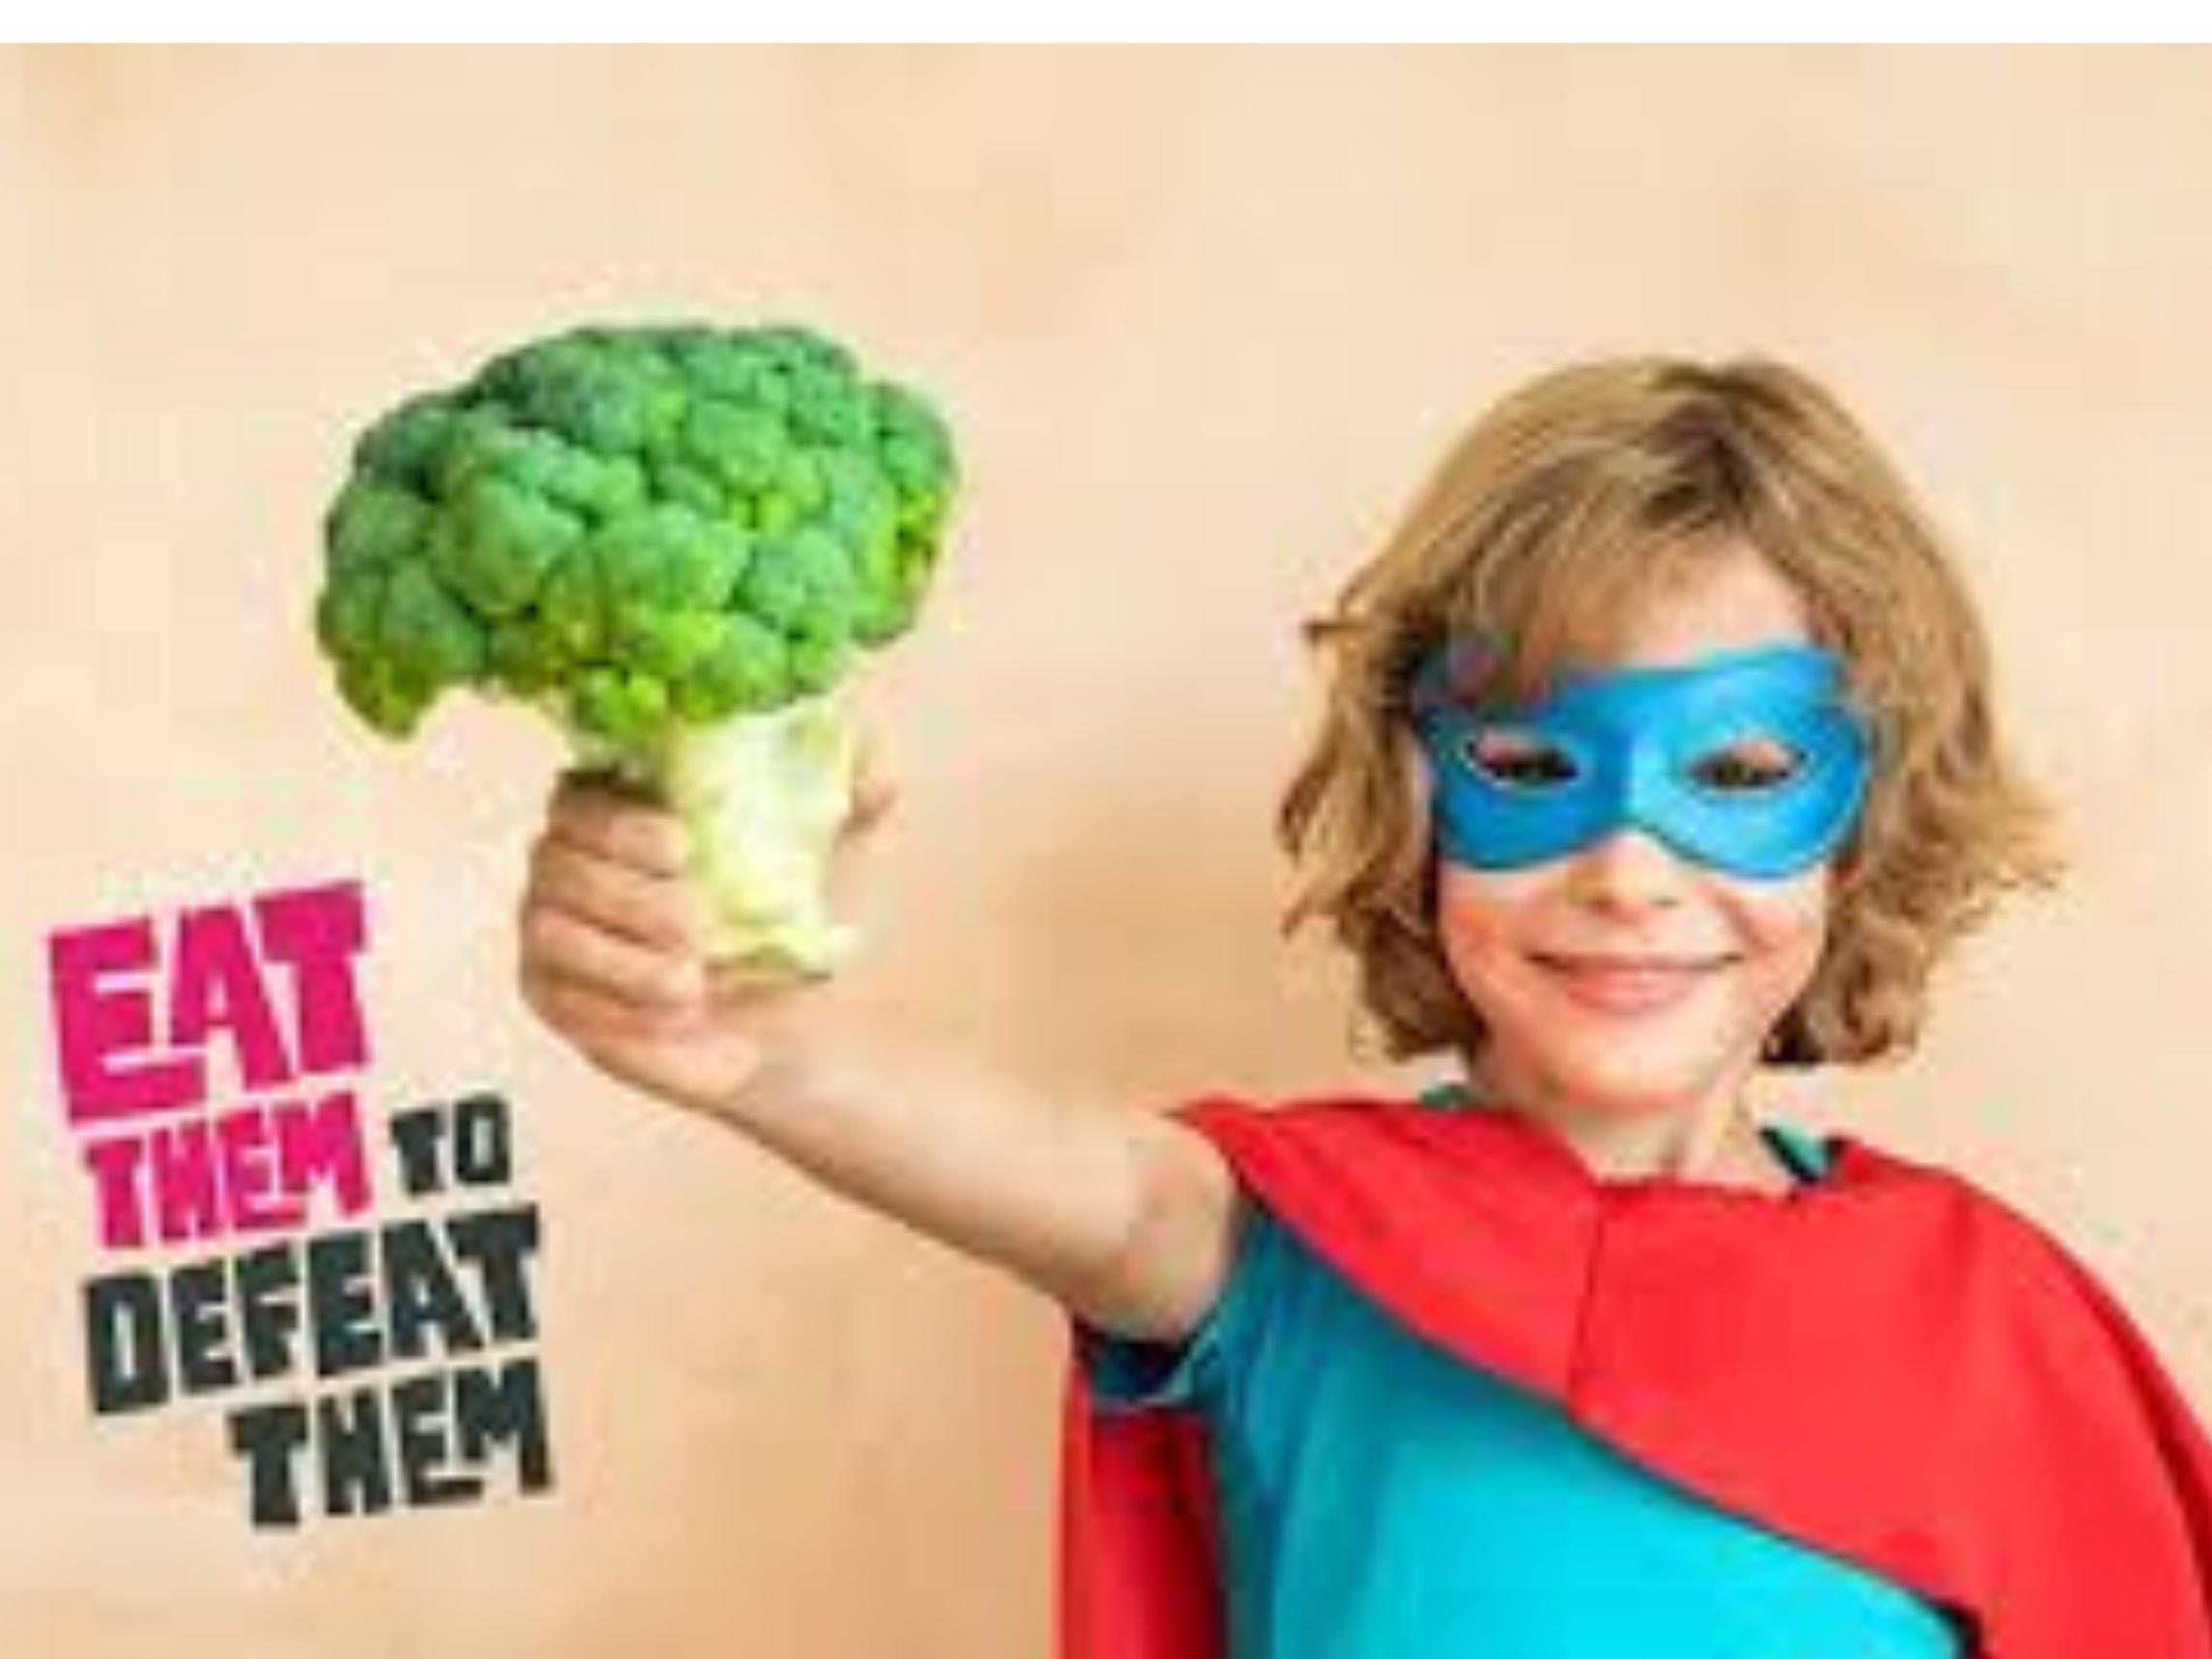 Child with superhero mask holding broccoli